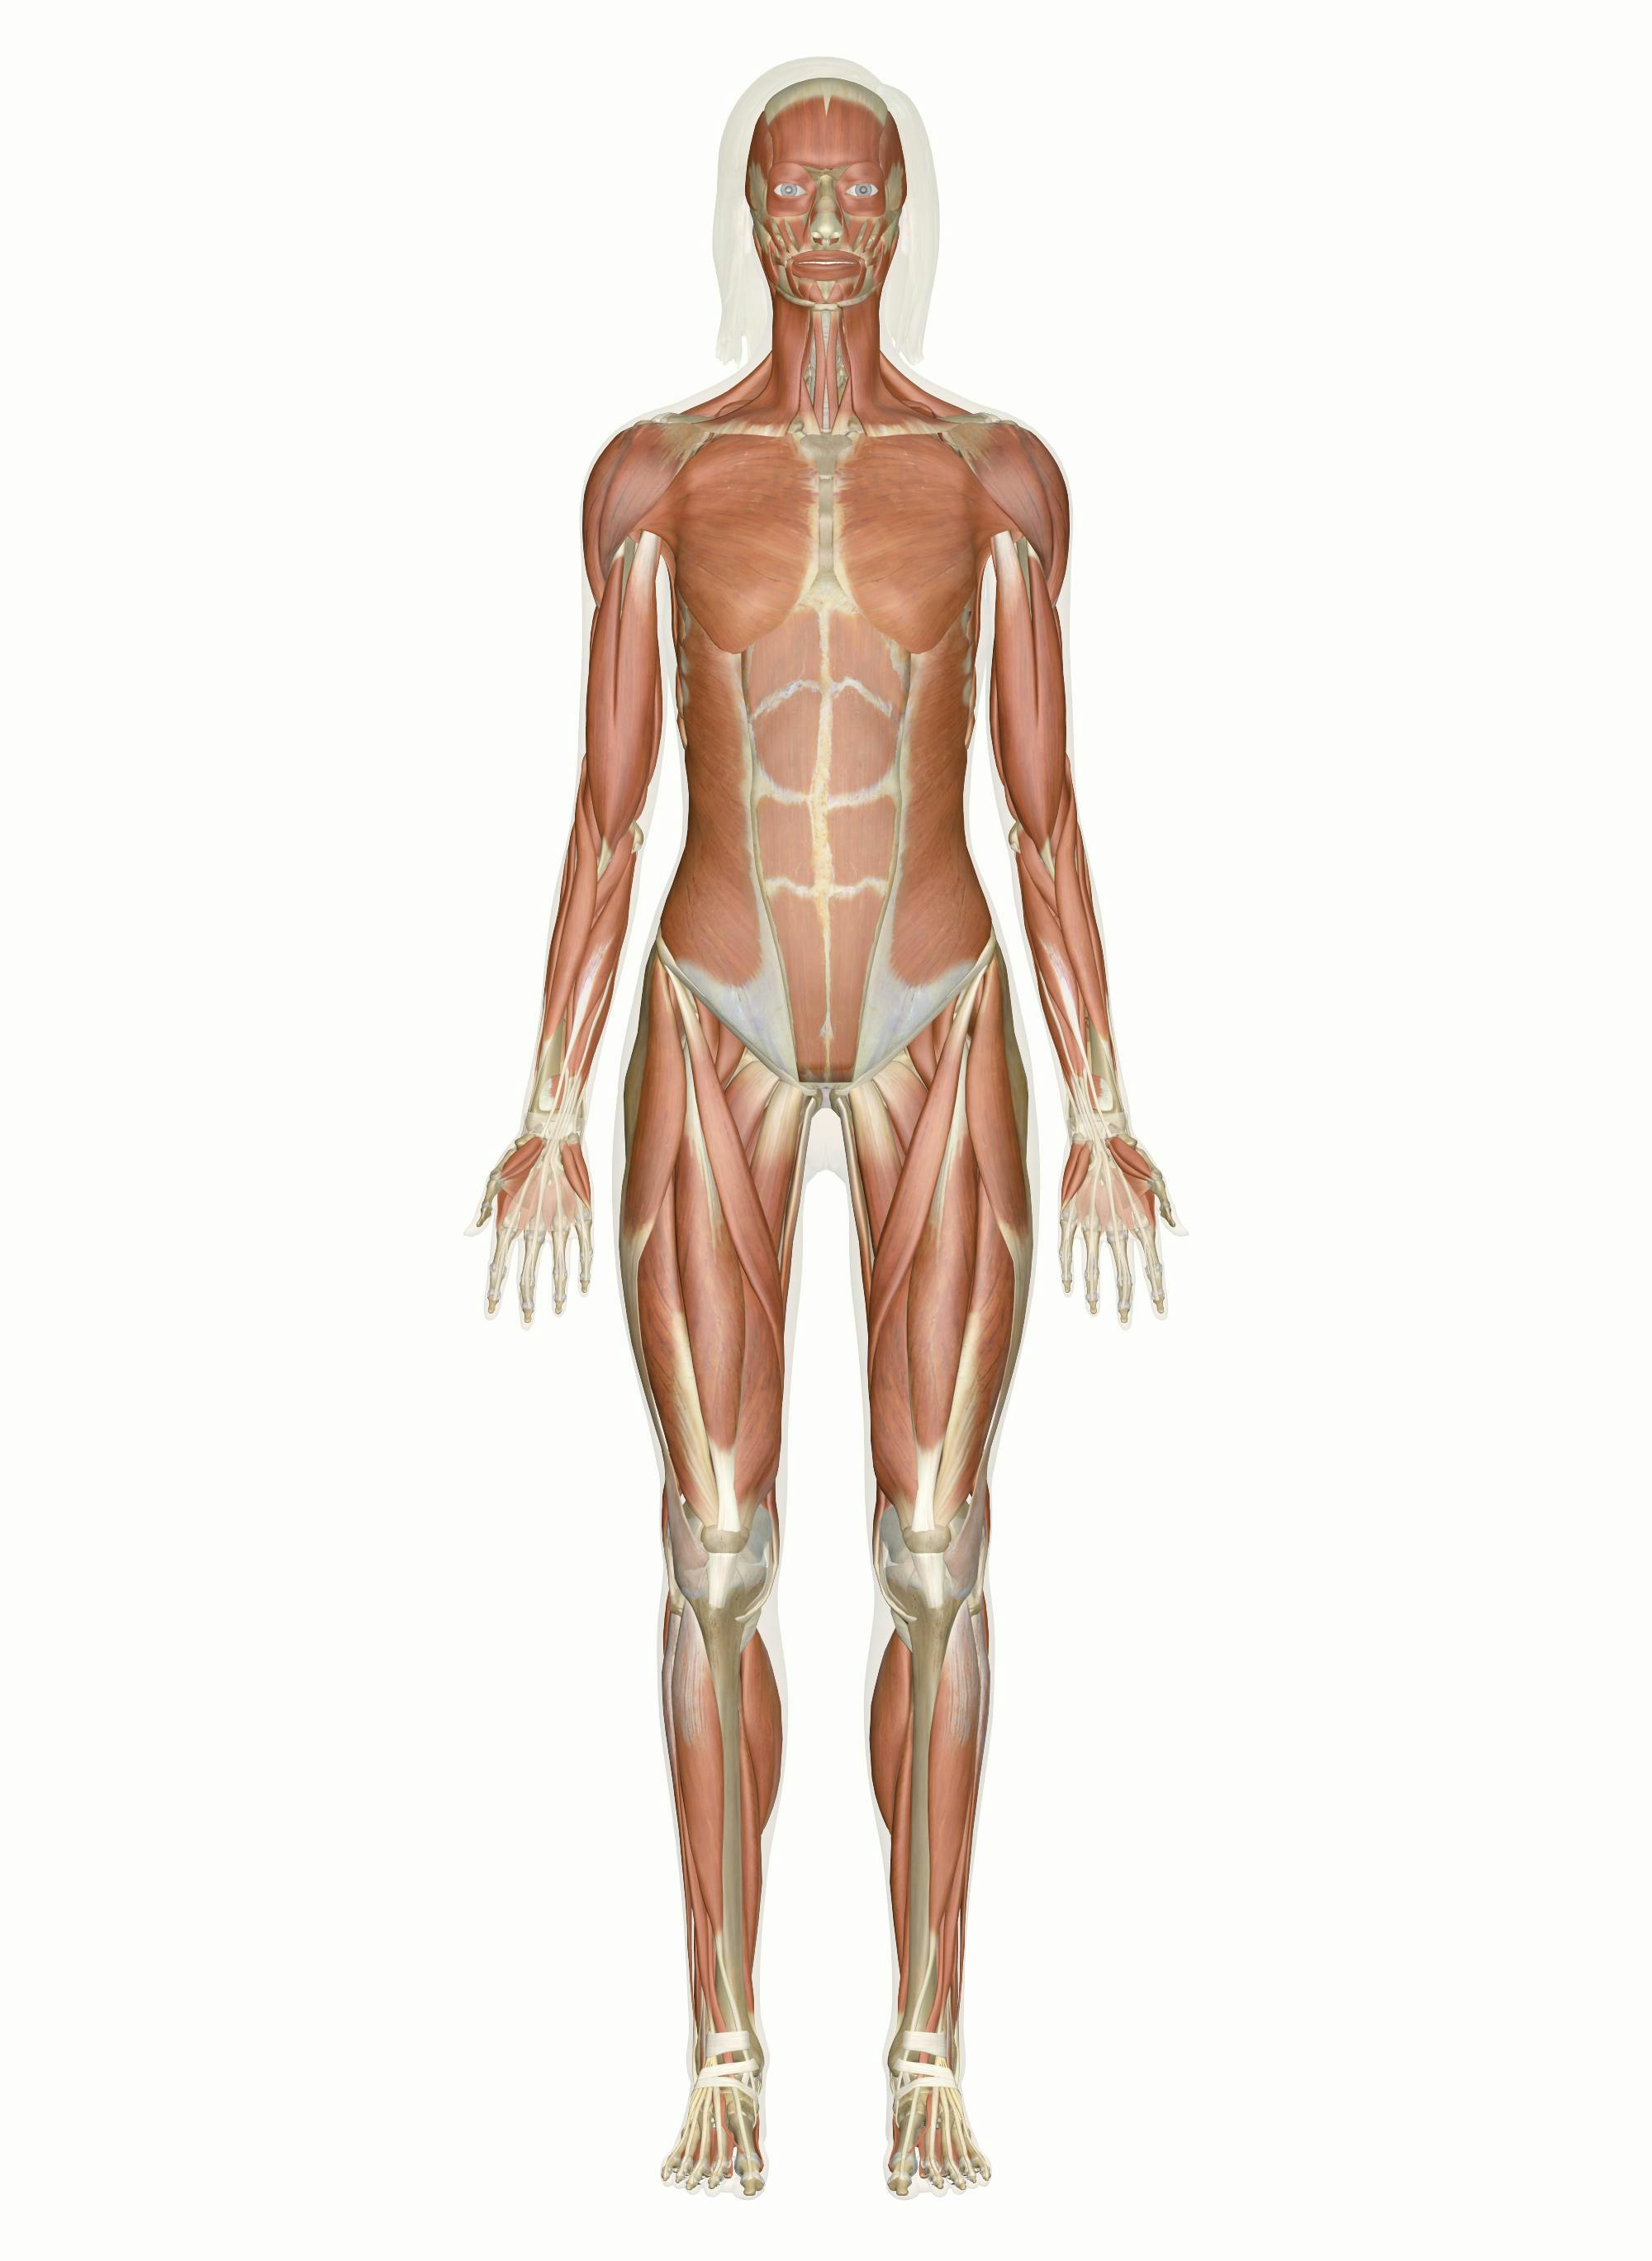 Digital render of fleshless person, showcasing the underlying muscular system.